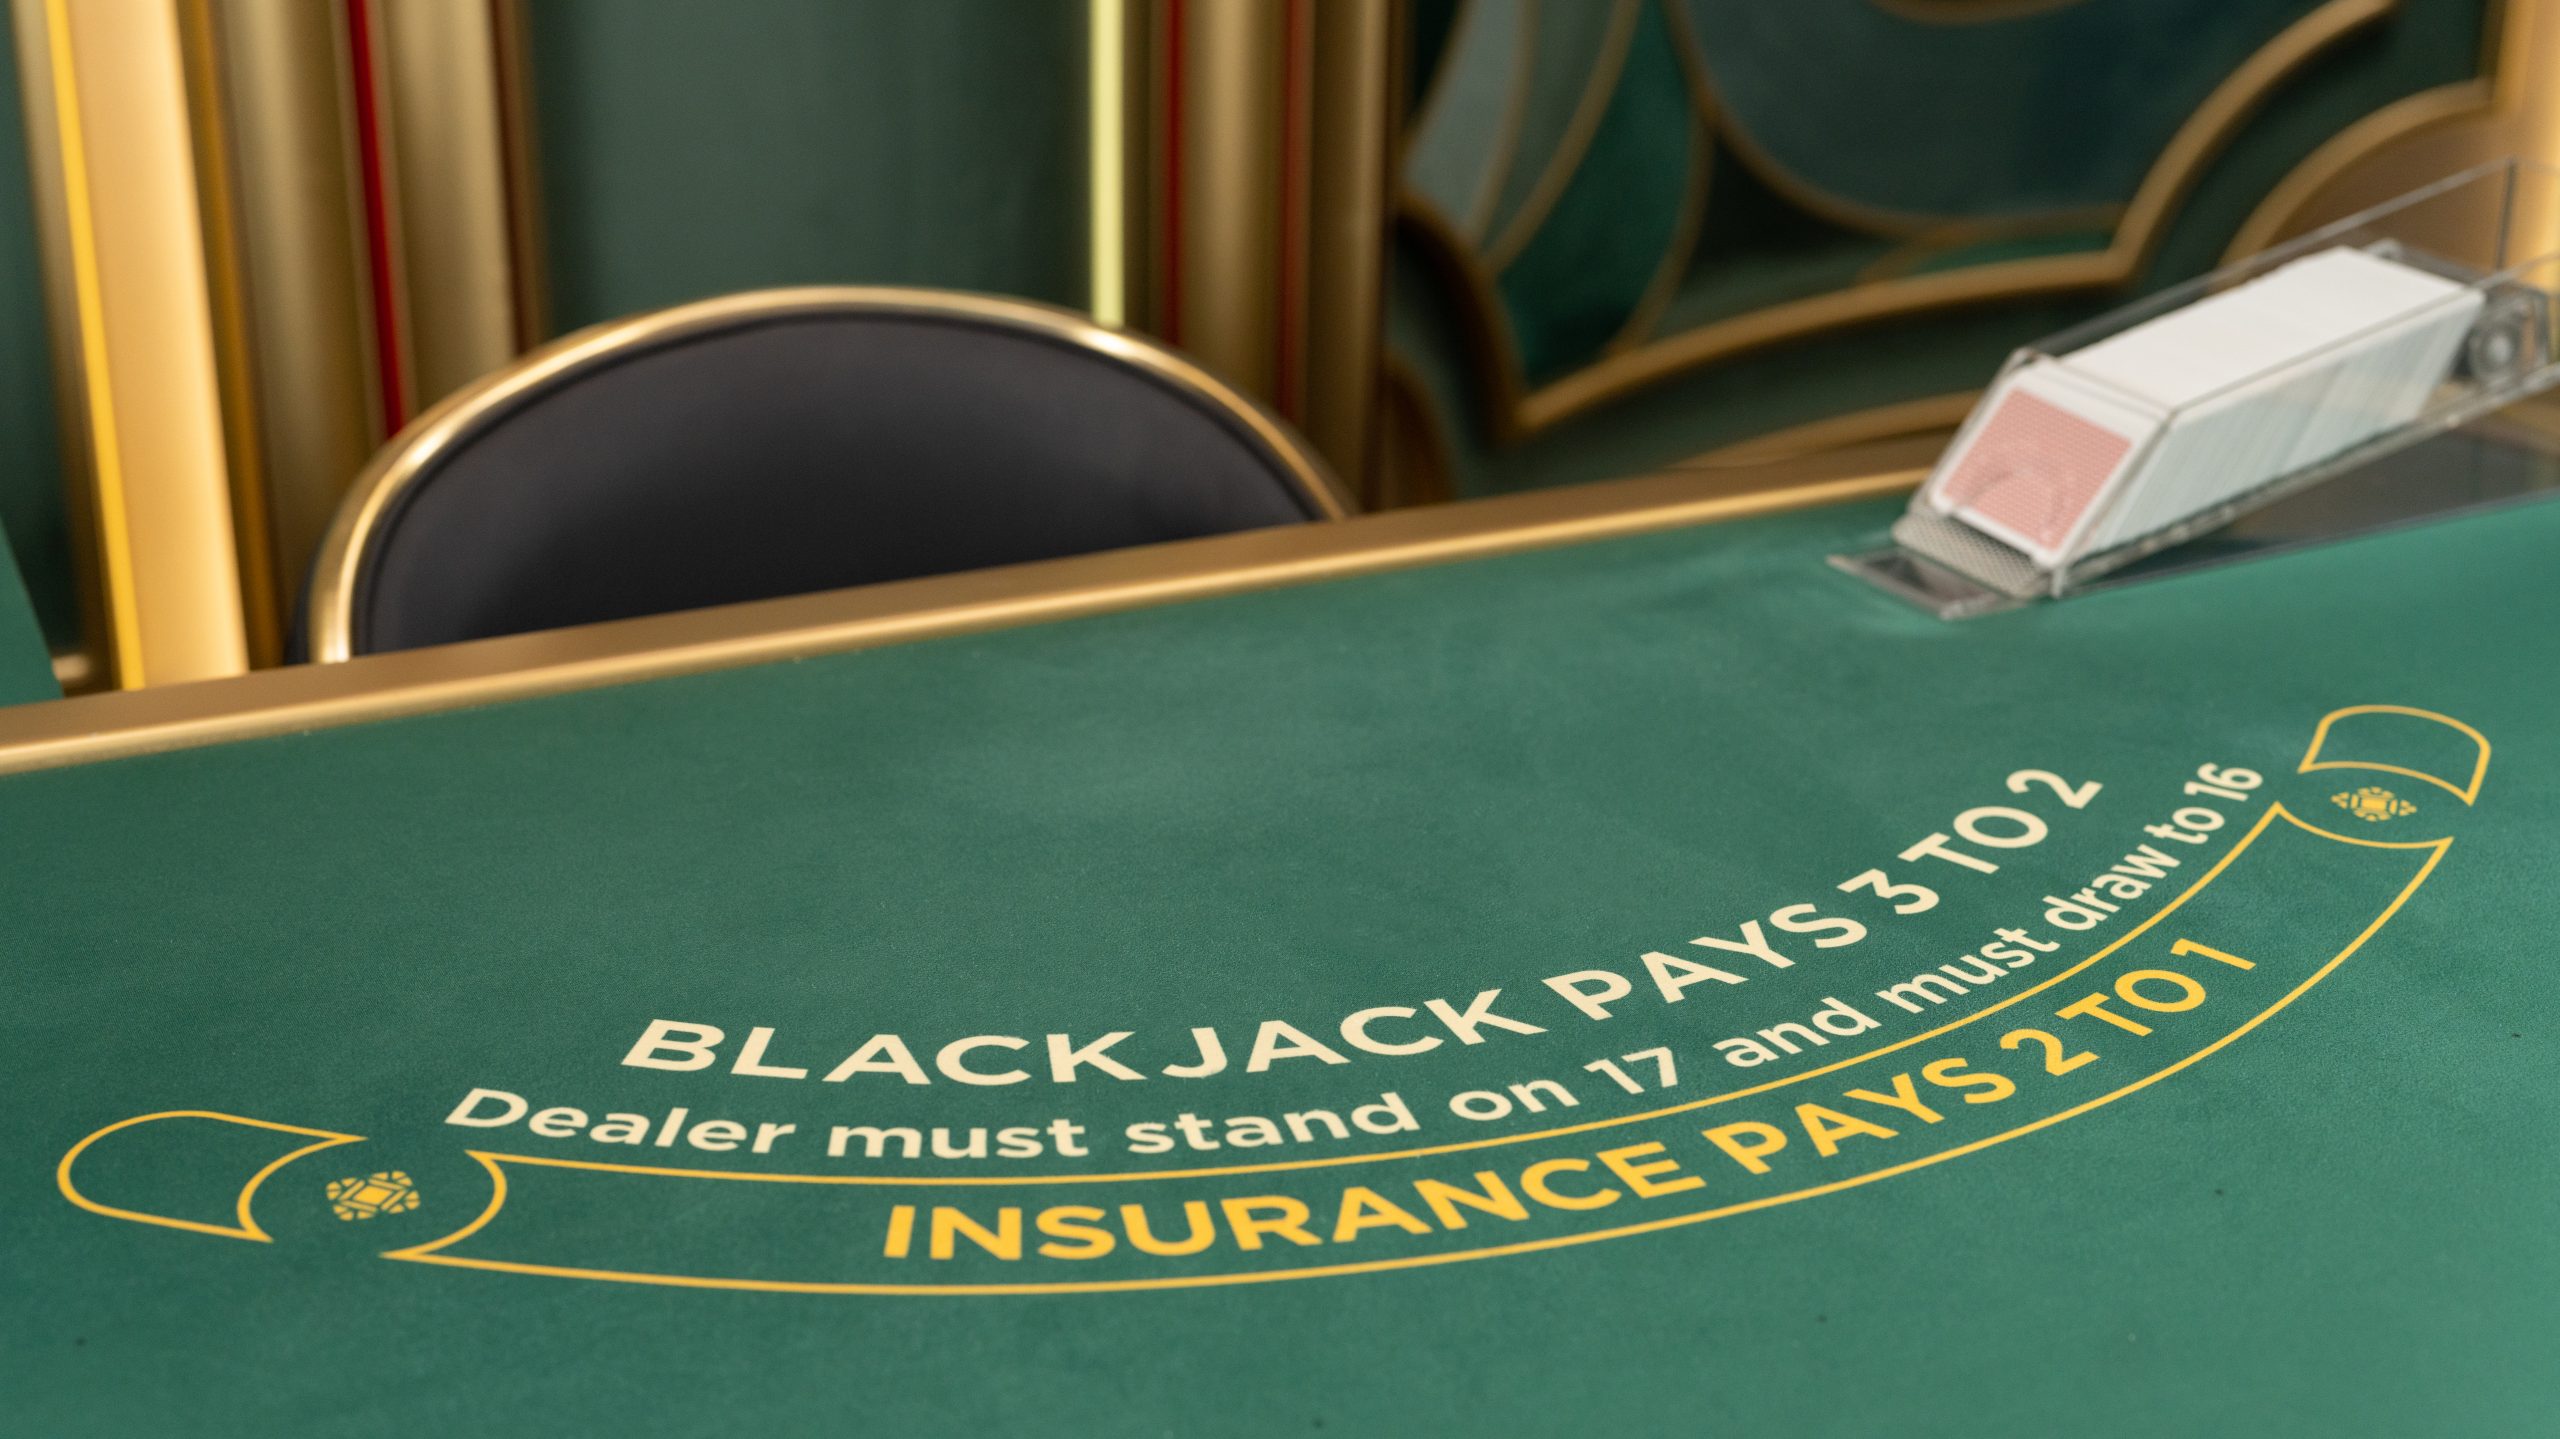 blackjack_gold_4_image_2021_07_08-.jpg thumbnail